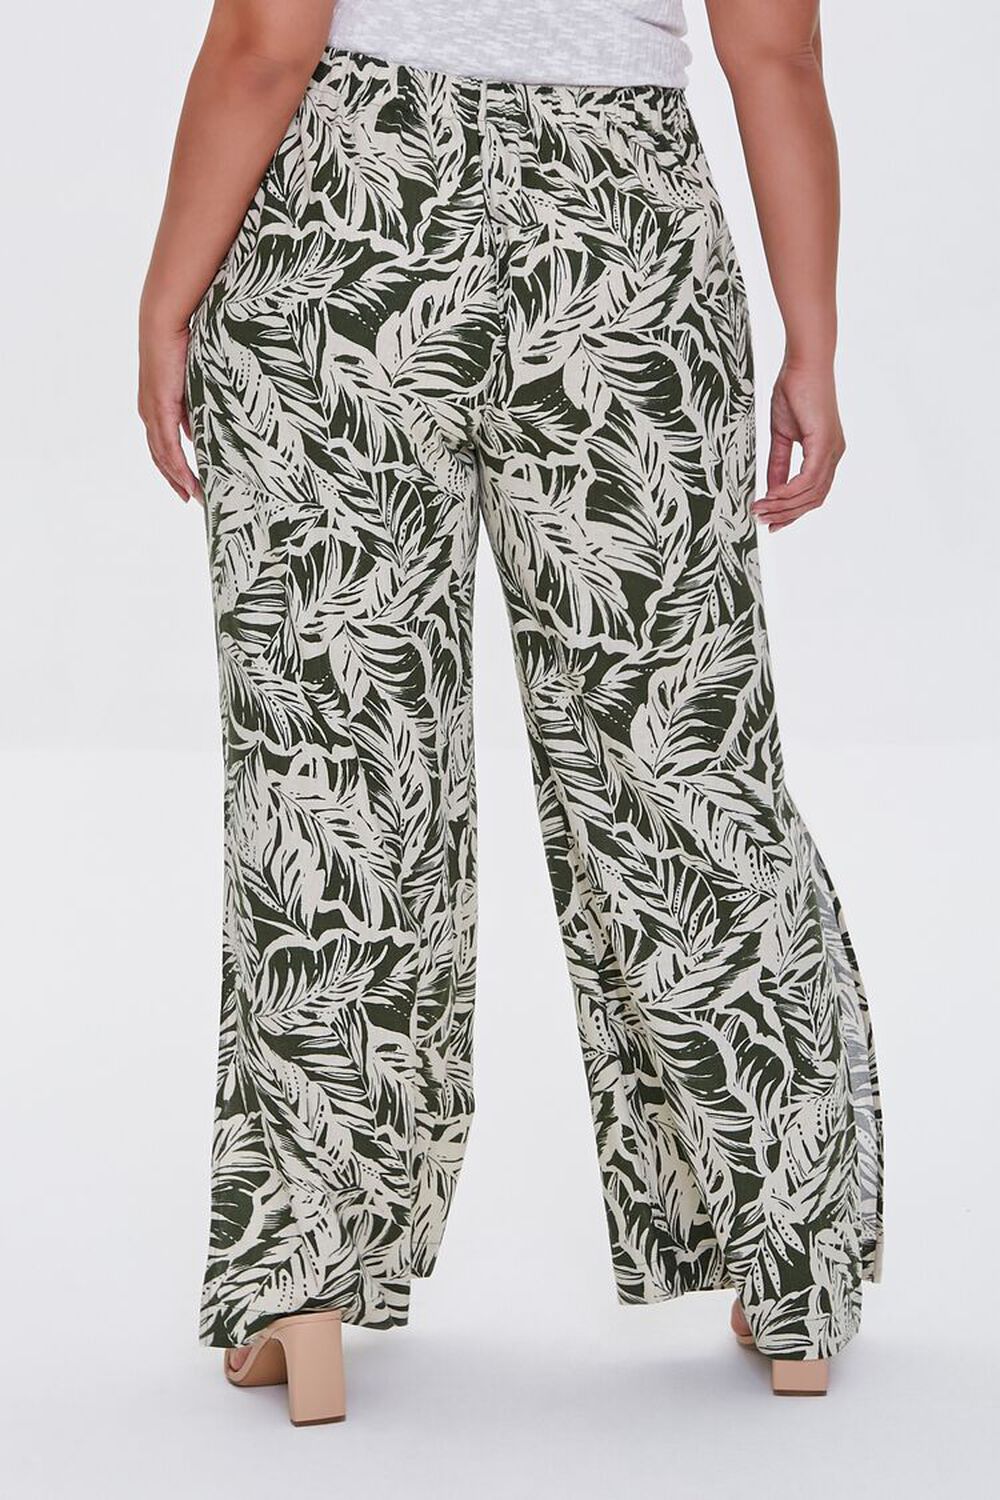 Finjani Plus Size Women Clothing Cashew Flower Printed Women's Pants  Polyester Stretch Pant